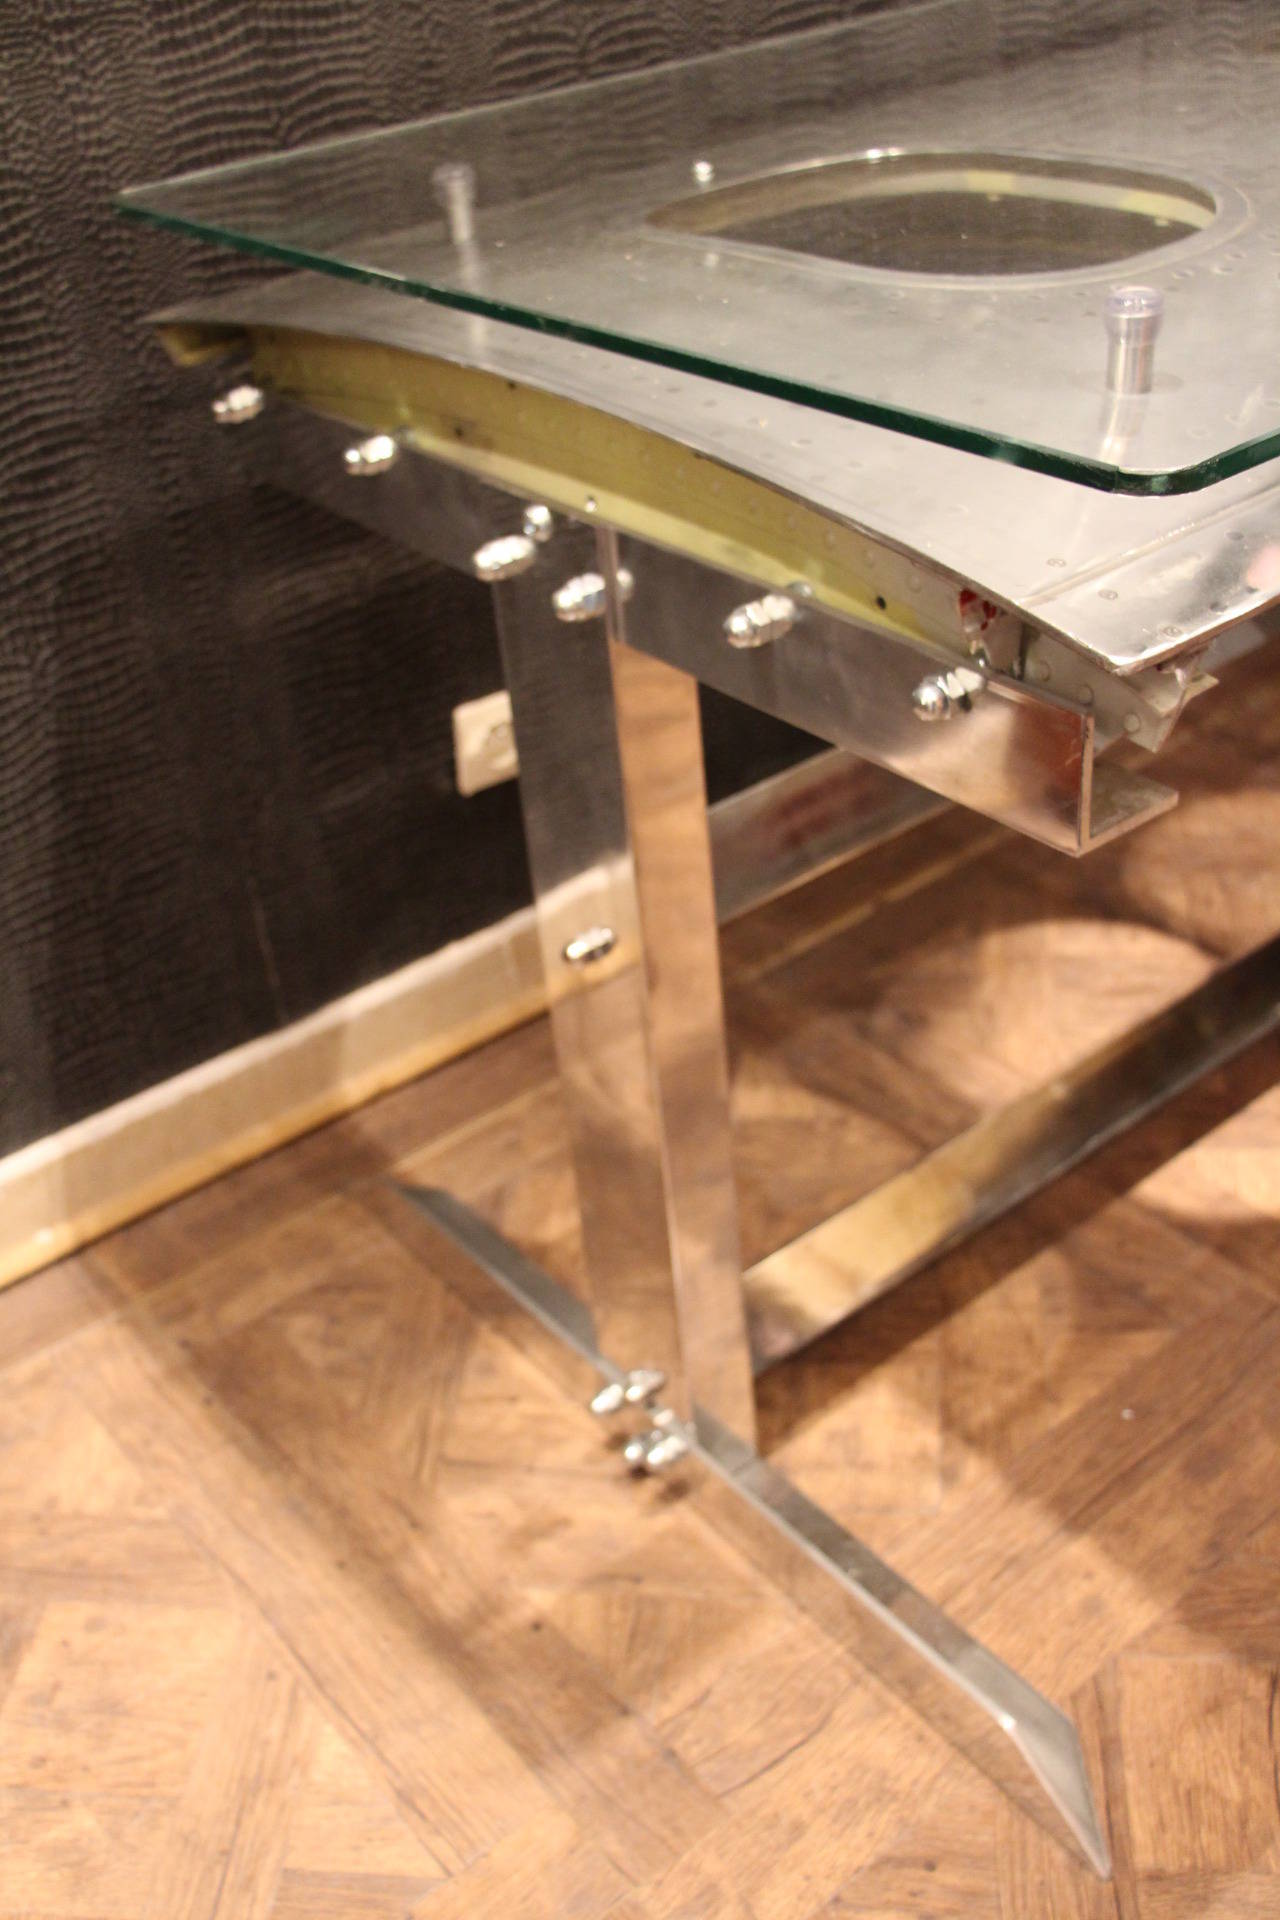 Polished Aluminium Airplane's Fuselage Desk or Table 2